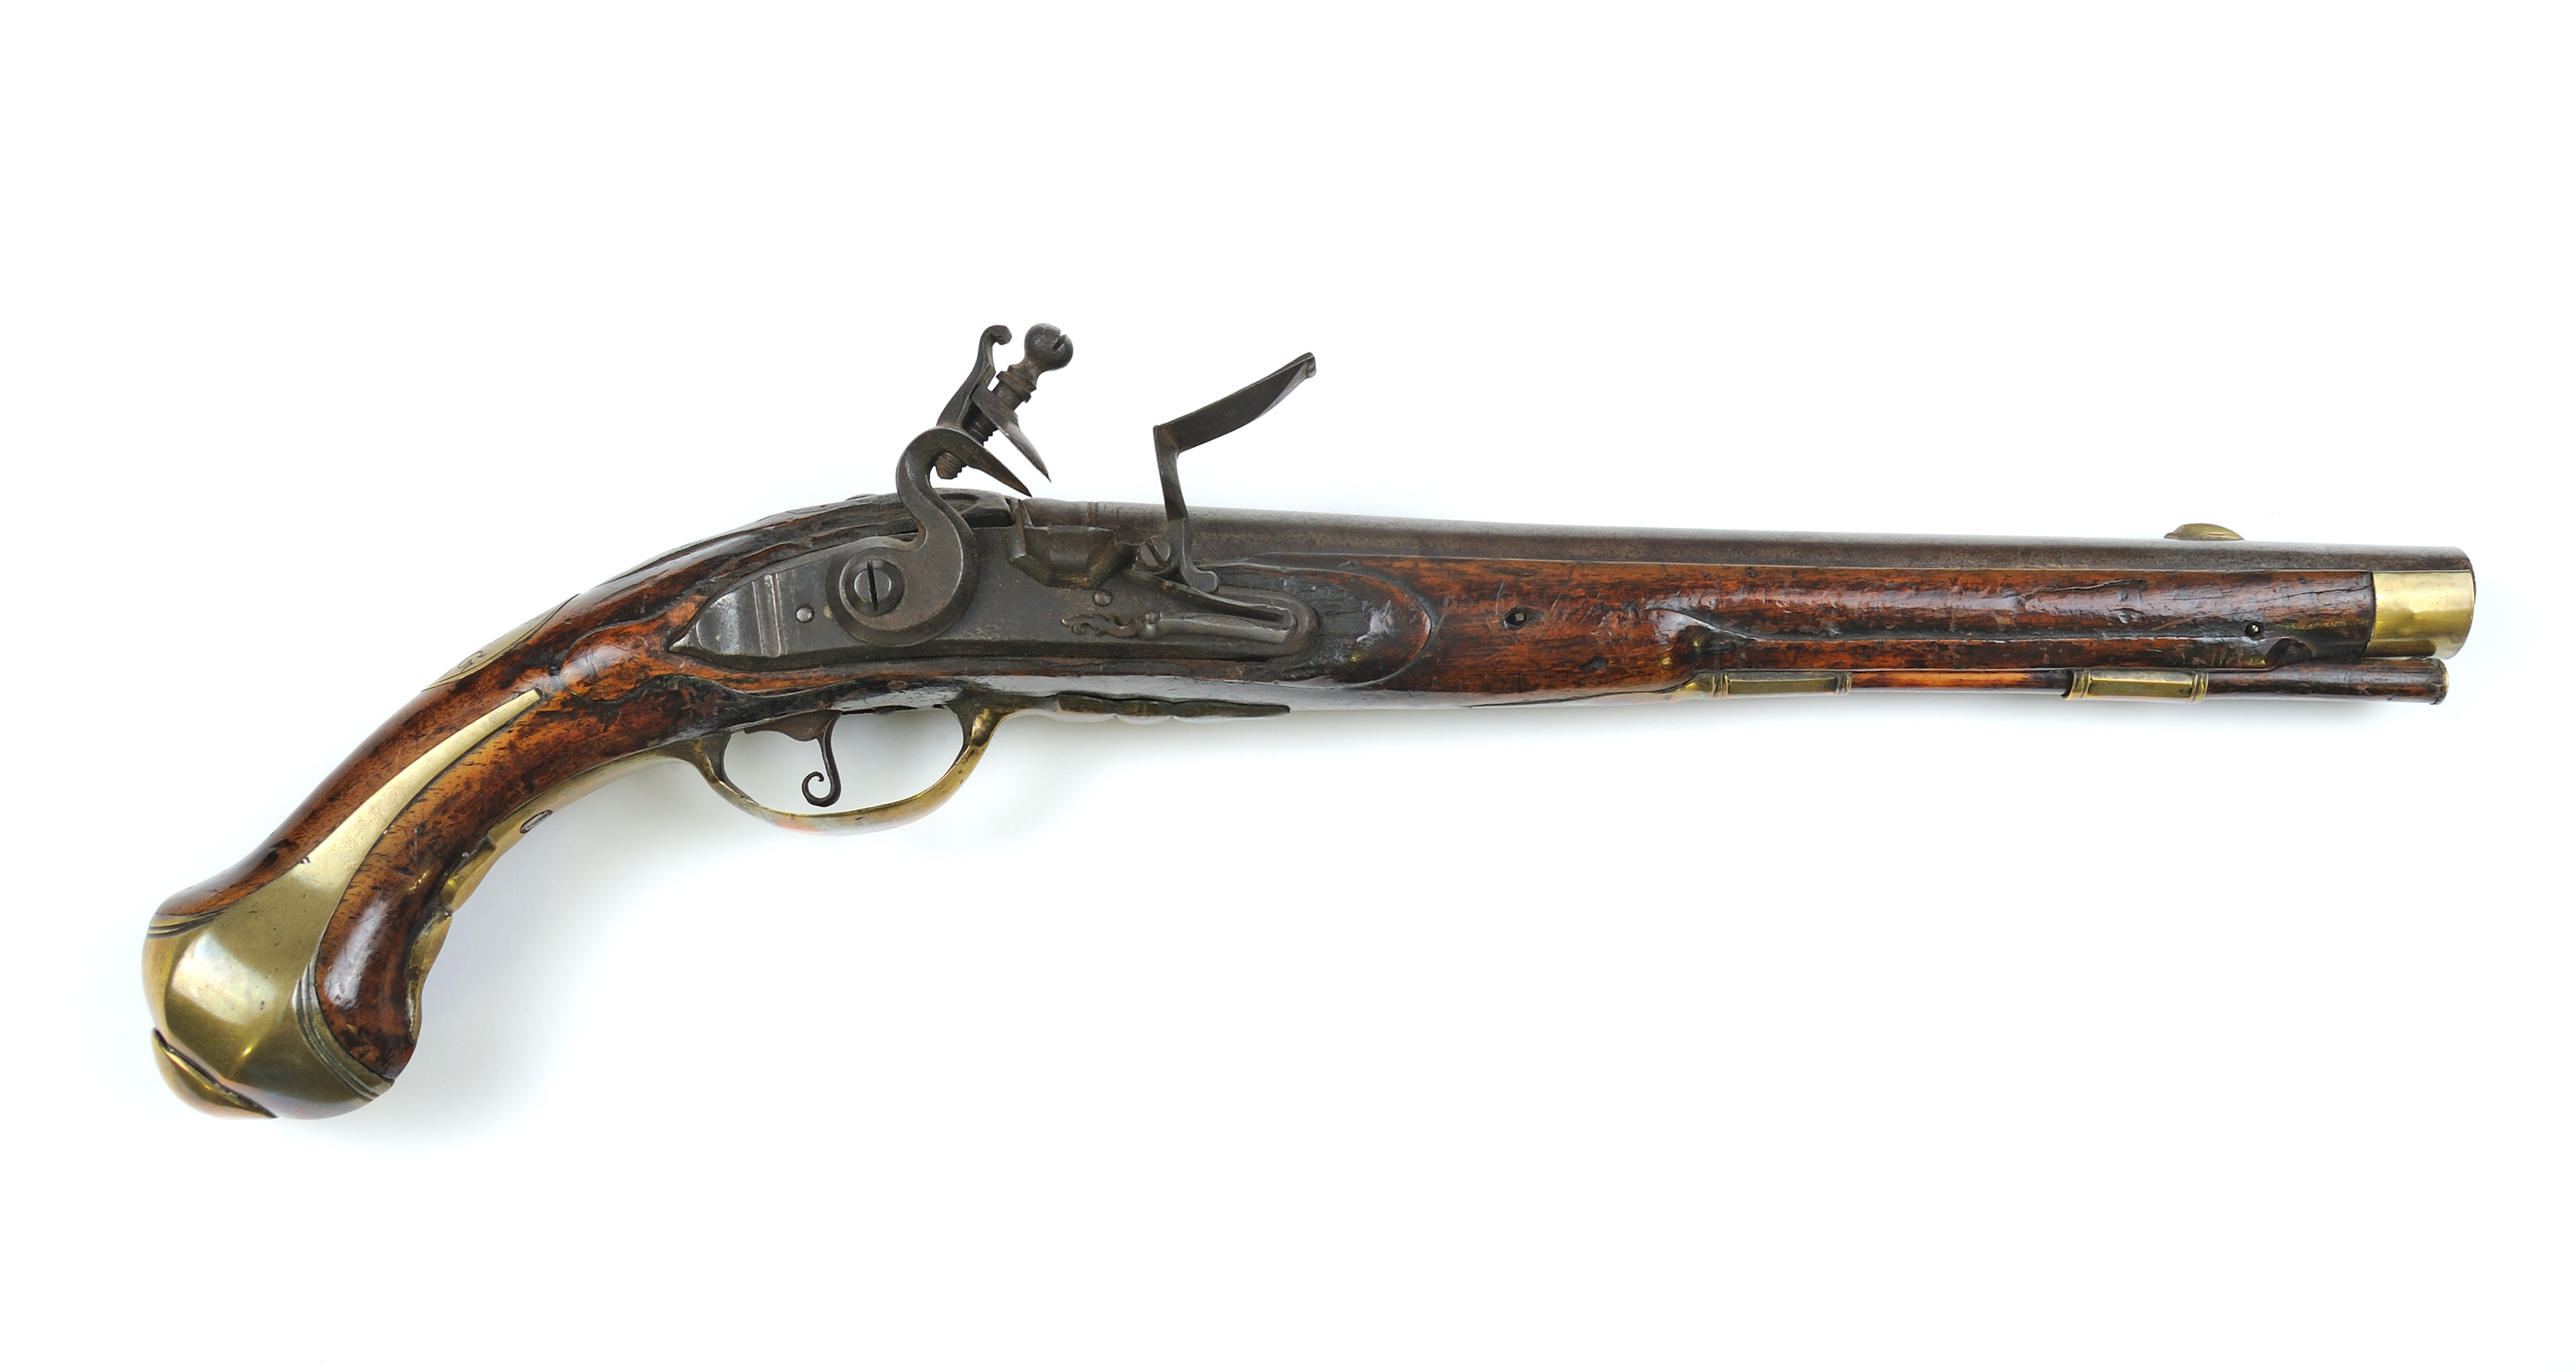 Hessian dragoon pistol, ca. 1755-1770